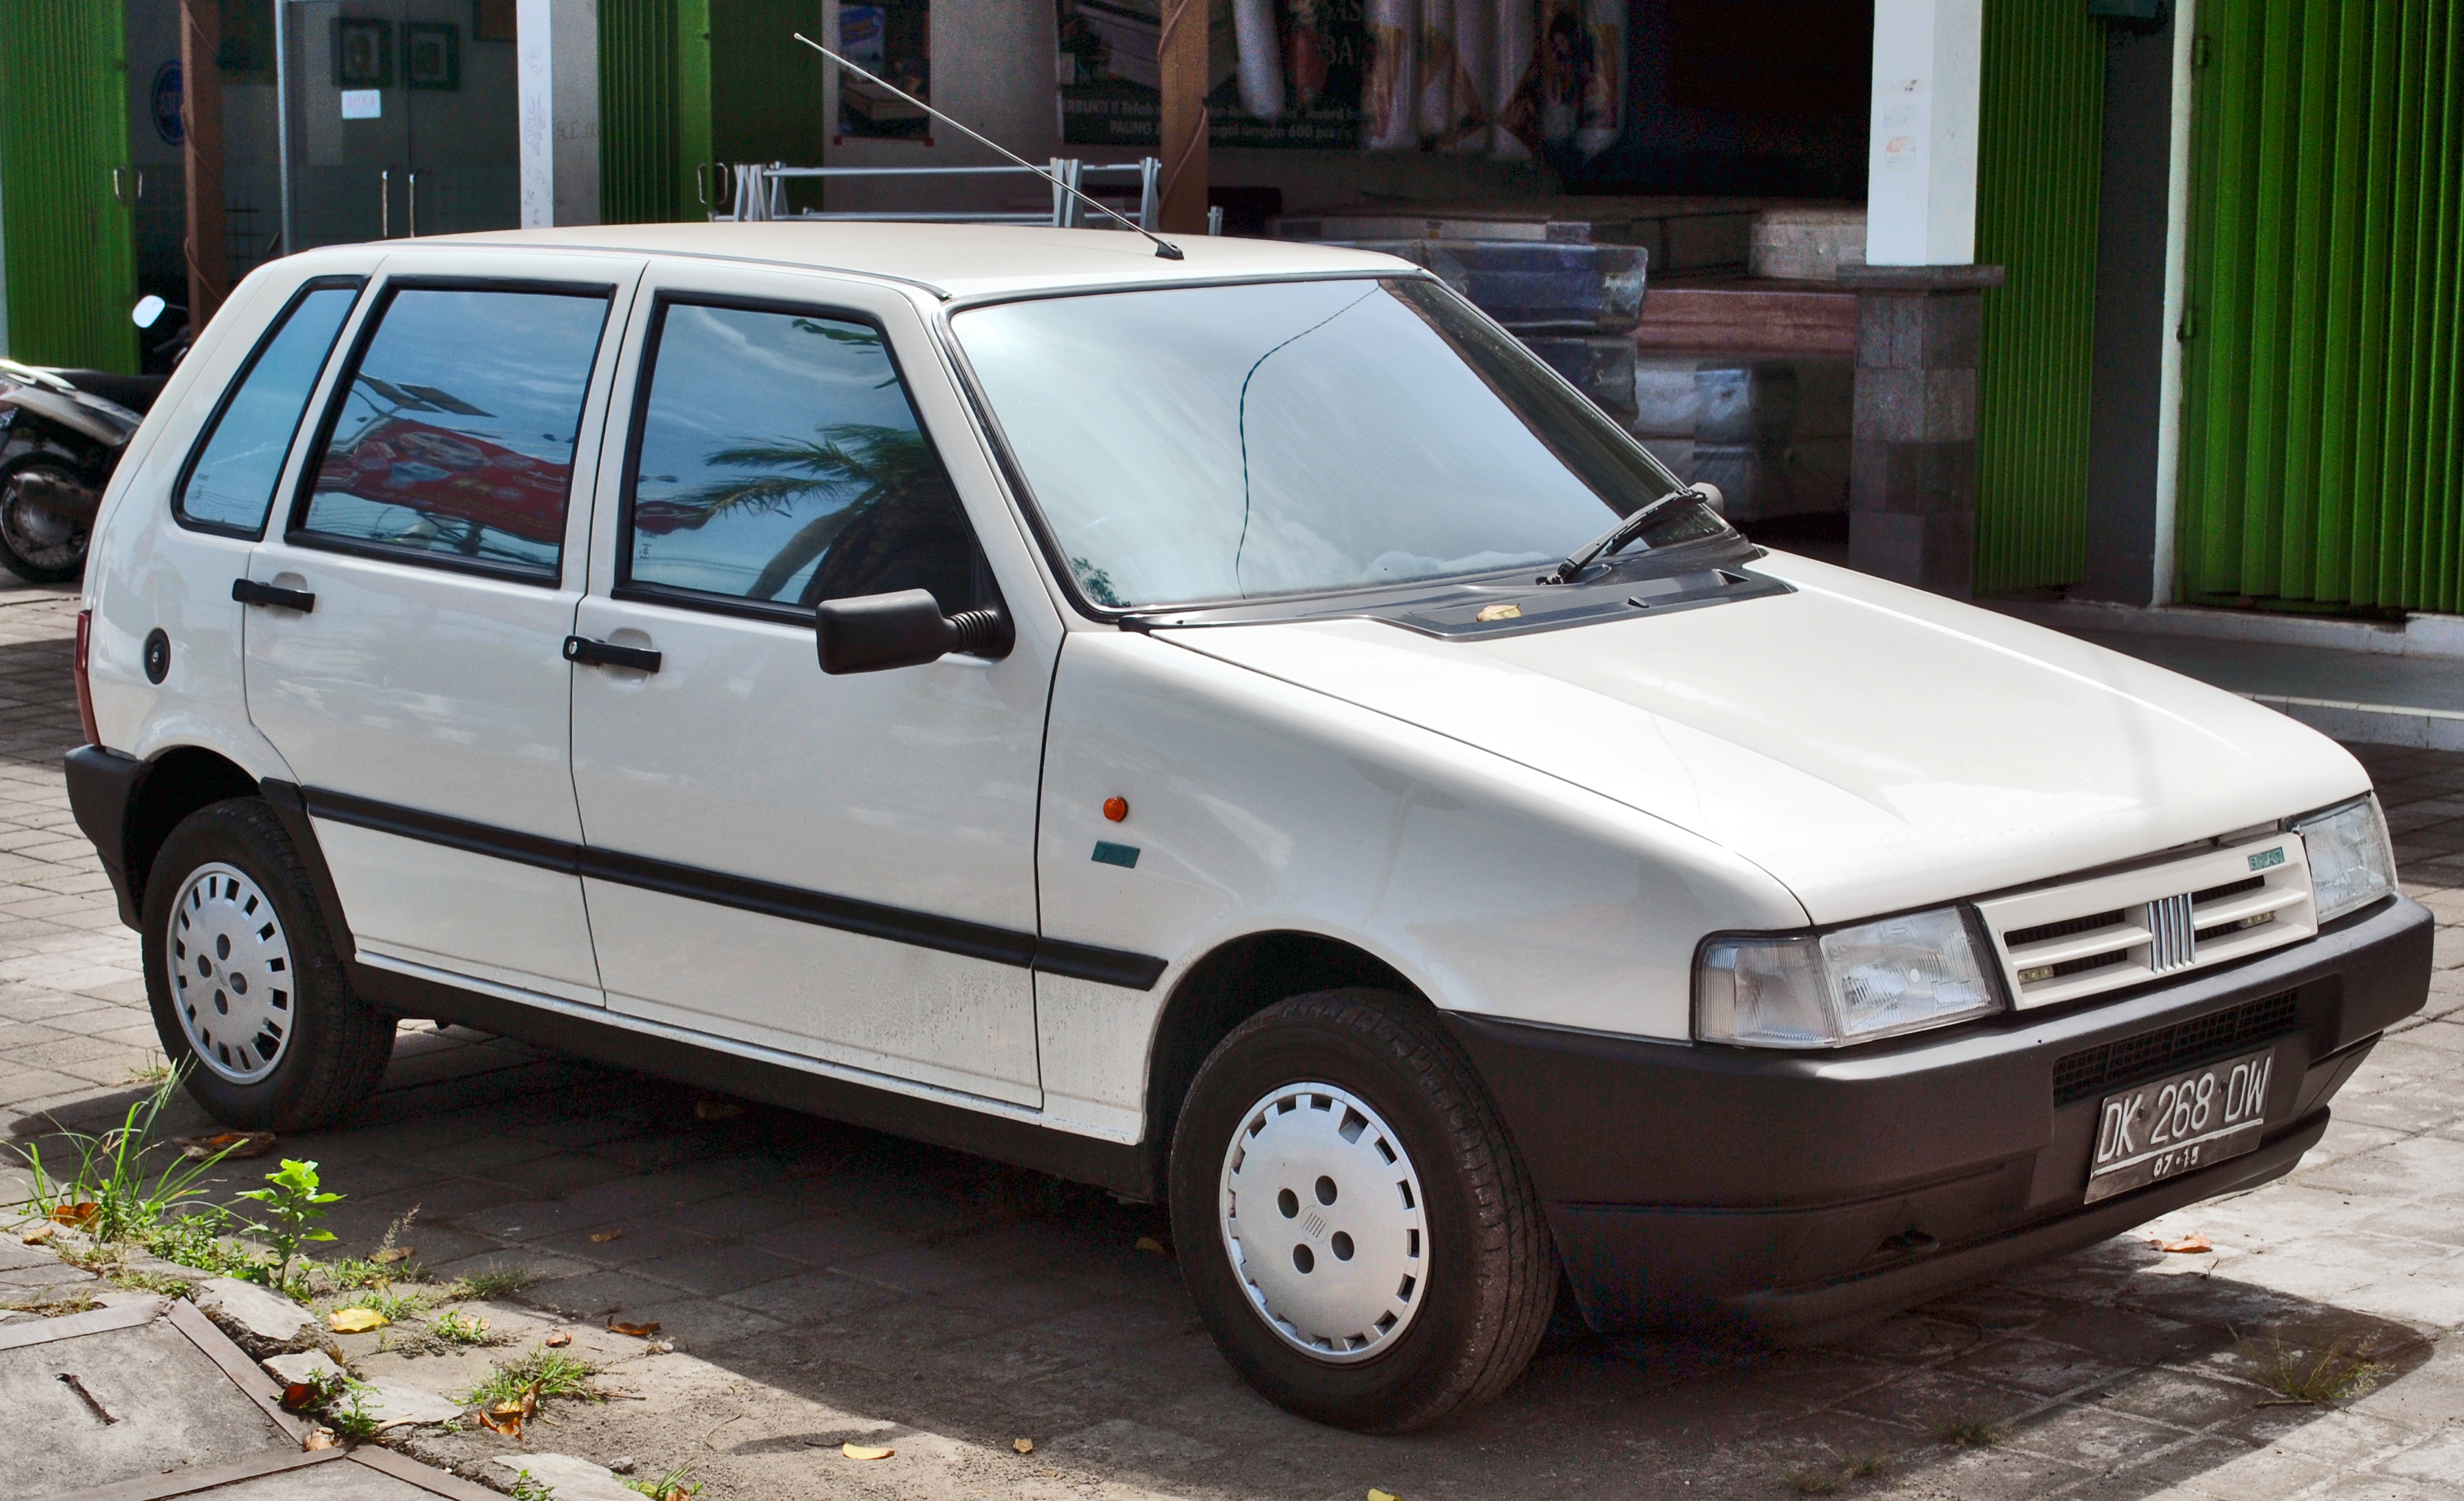 Datei:Fiat Uno (front), Jimbaran.jpg – Wikipedia